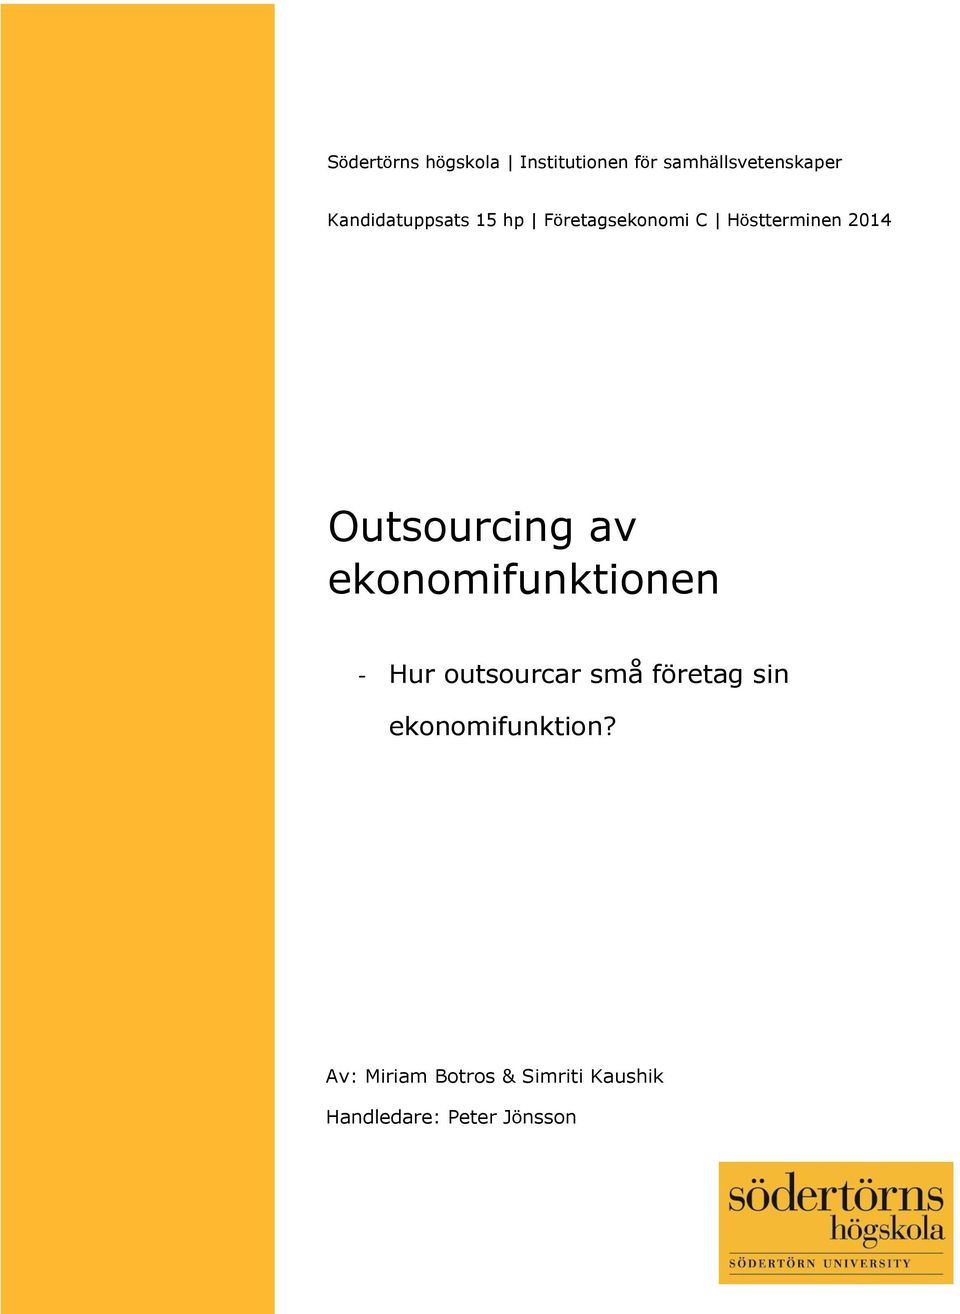 Outsourcing av ekonomifunktionen - Hur outsourcar små företag